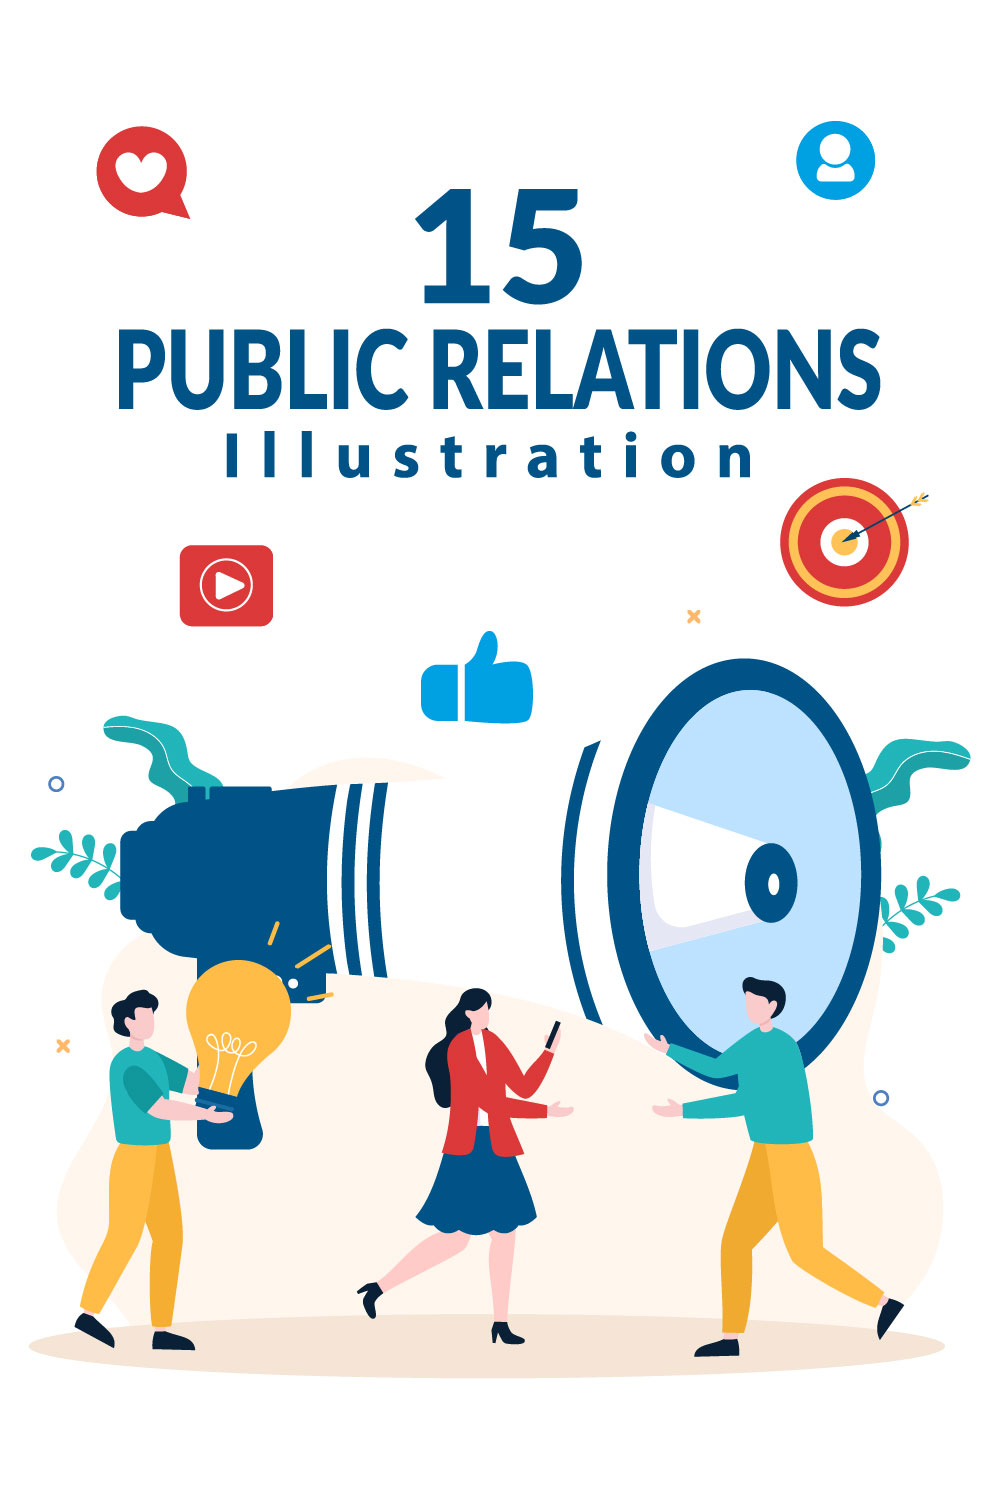 15 Public Relations Illustration pinterest image.